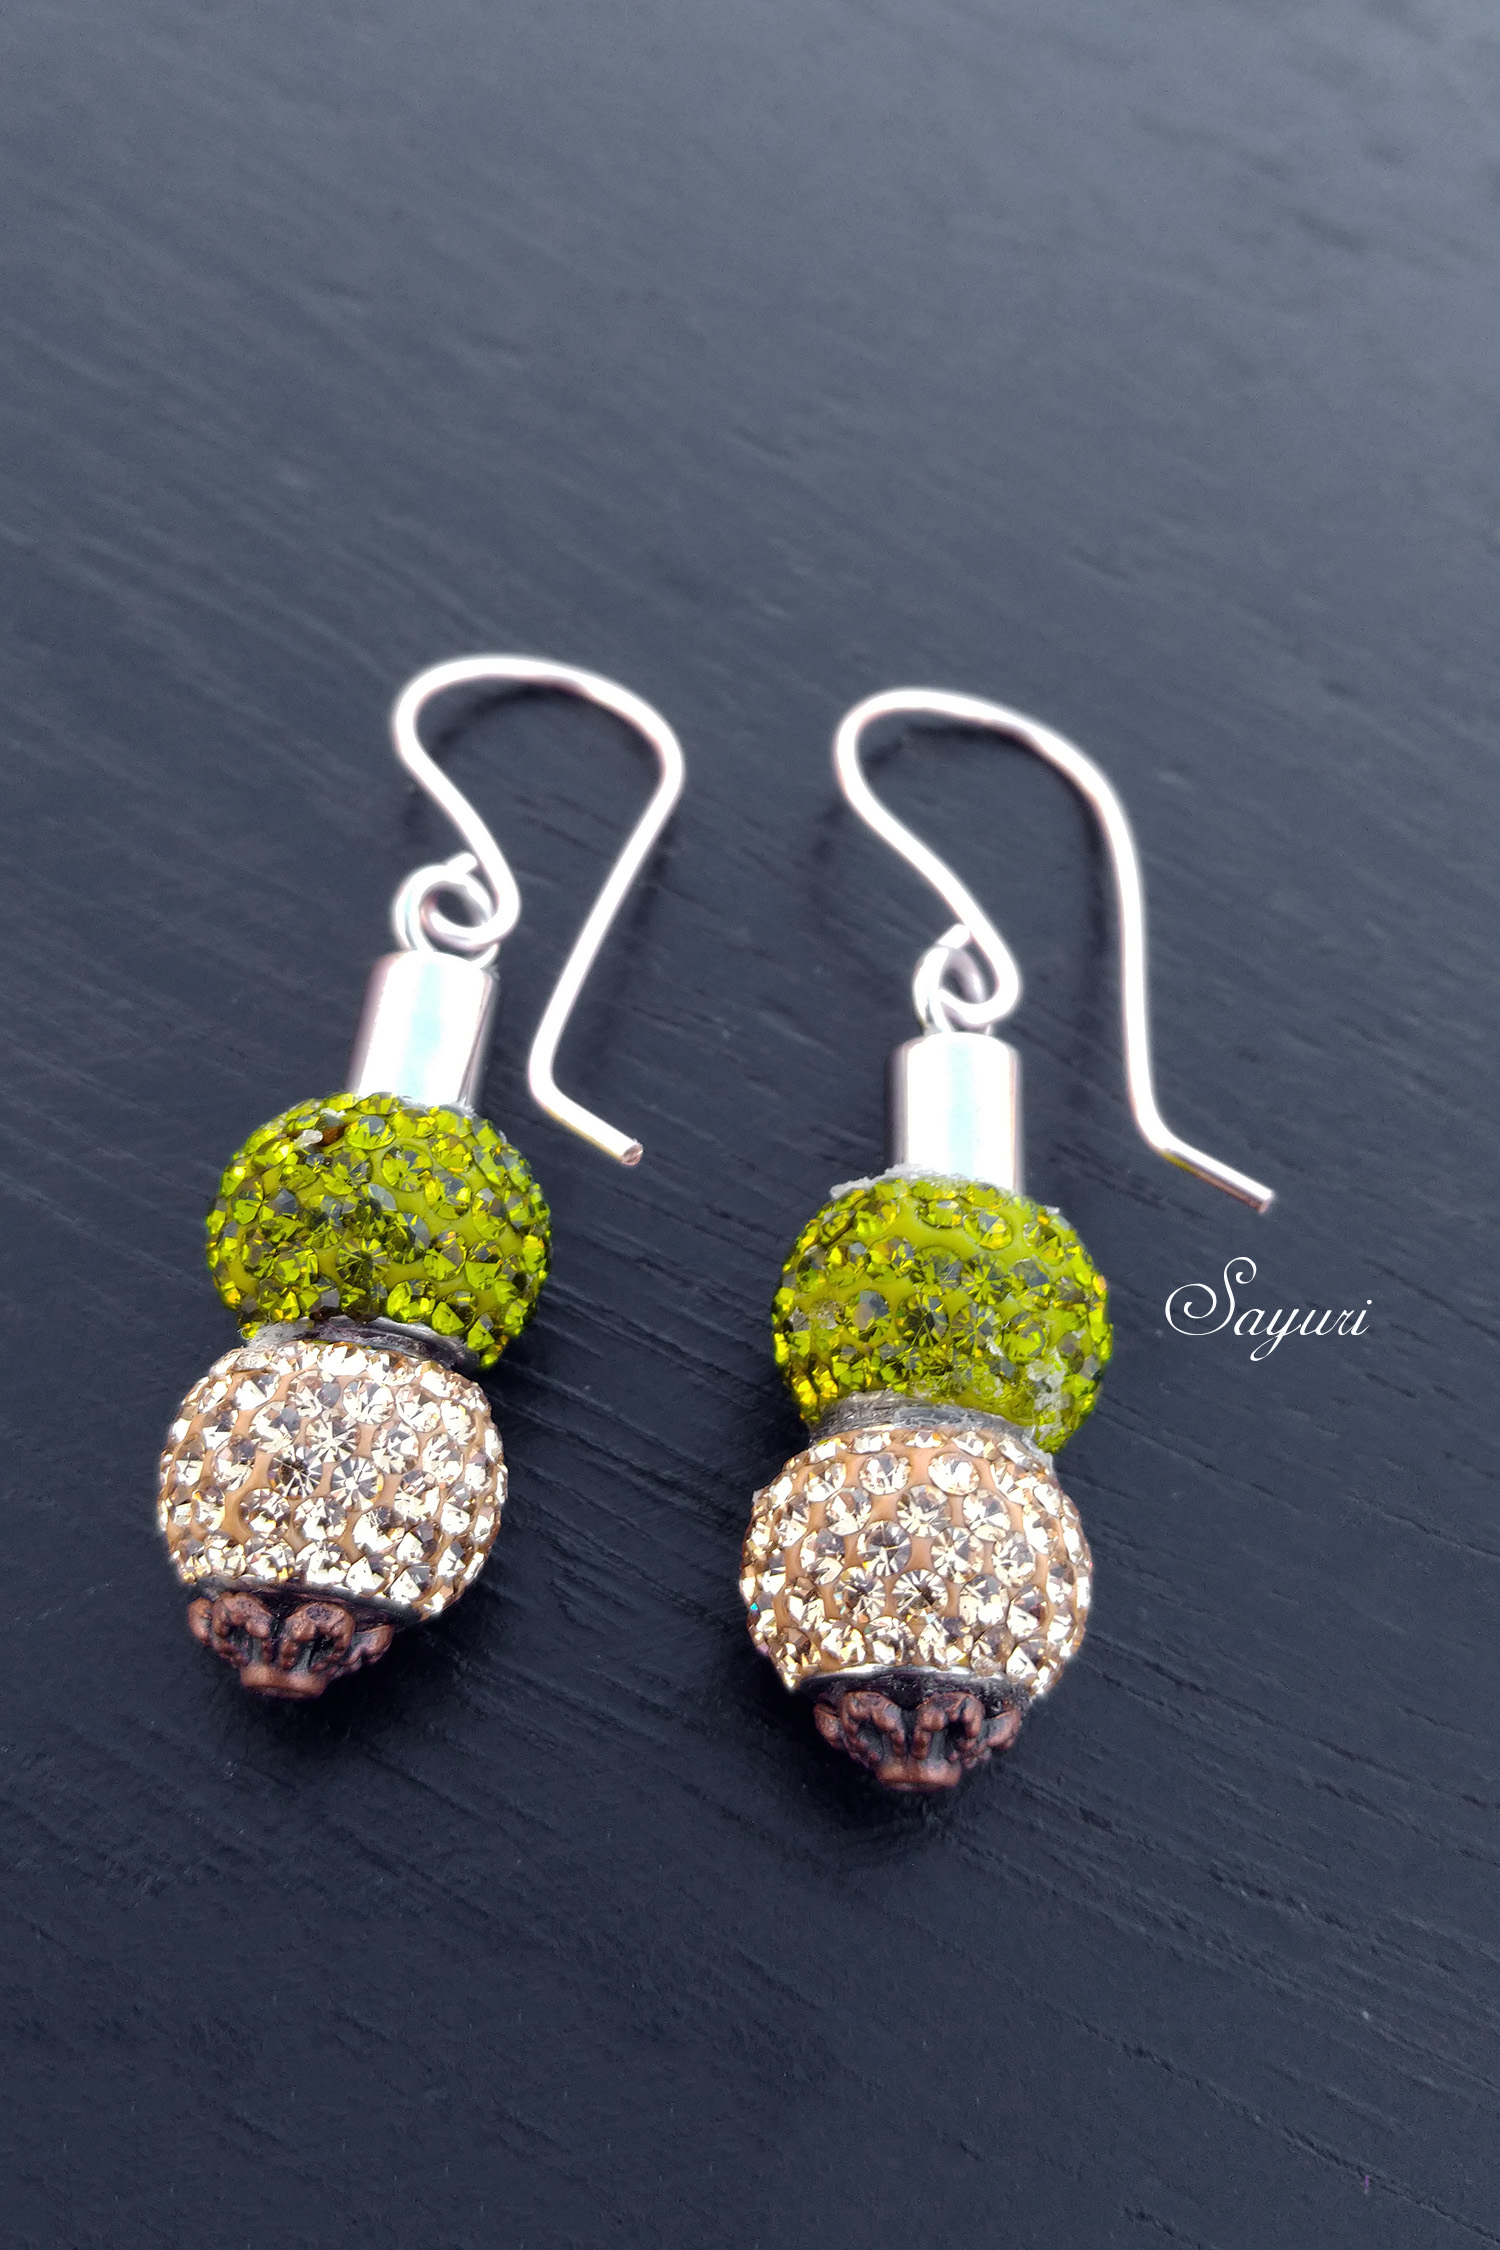 rhinestone bead earrings